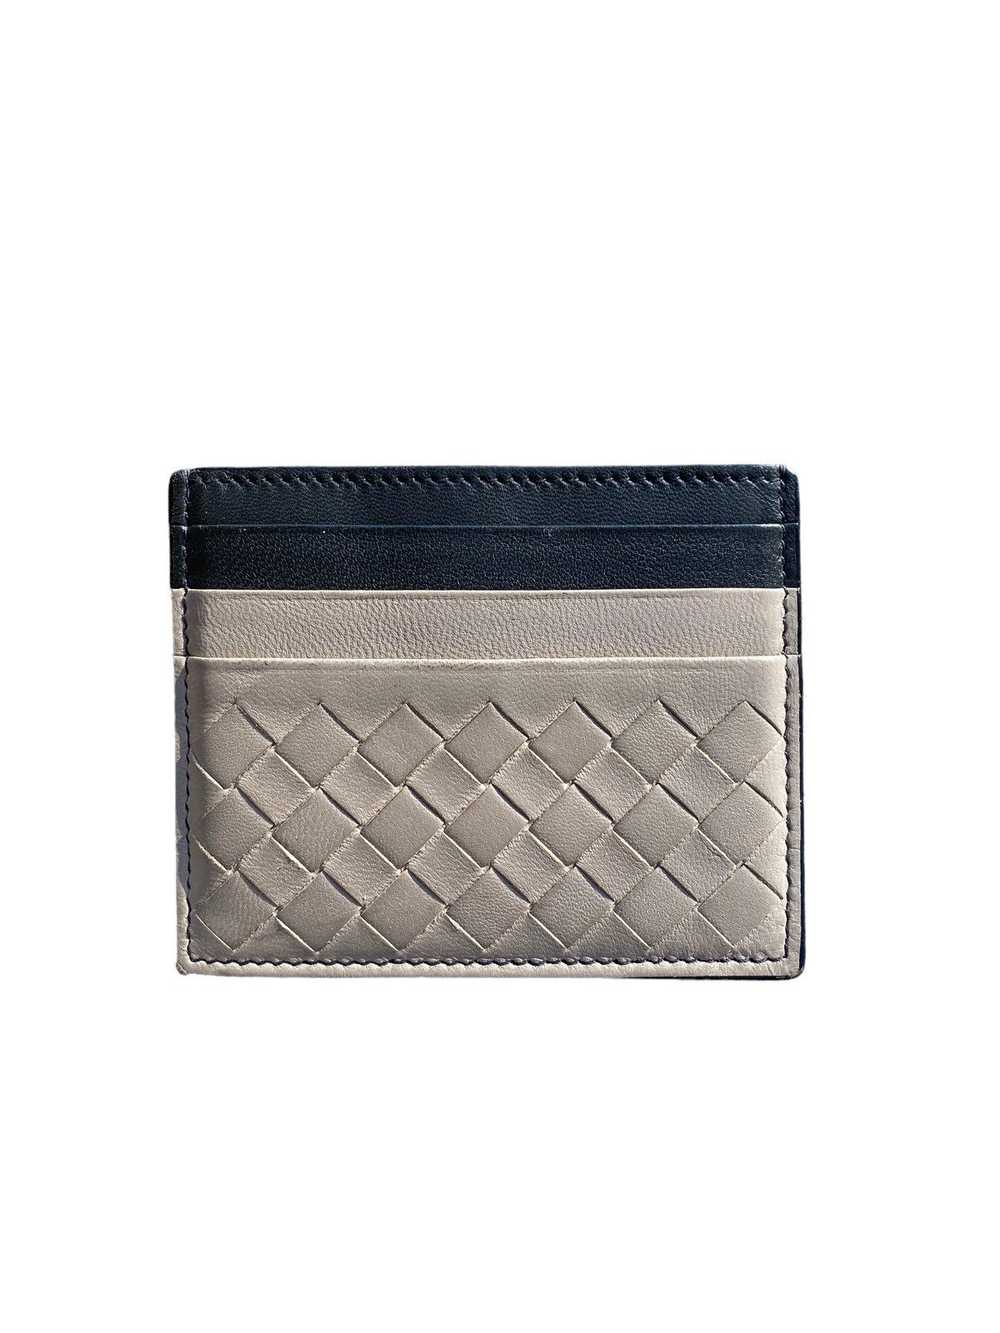 Bottega Veneta Card Holder Wallet - image 2